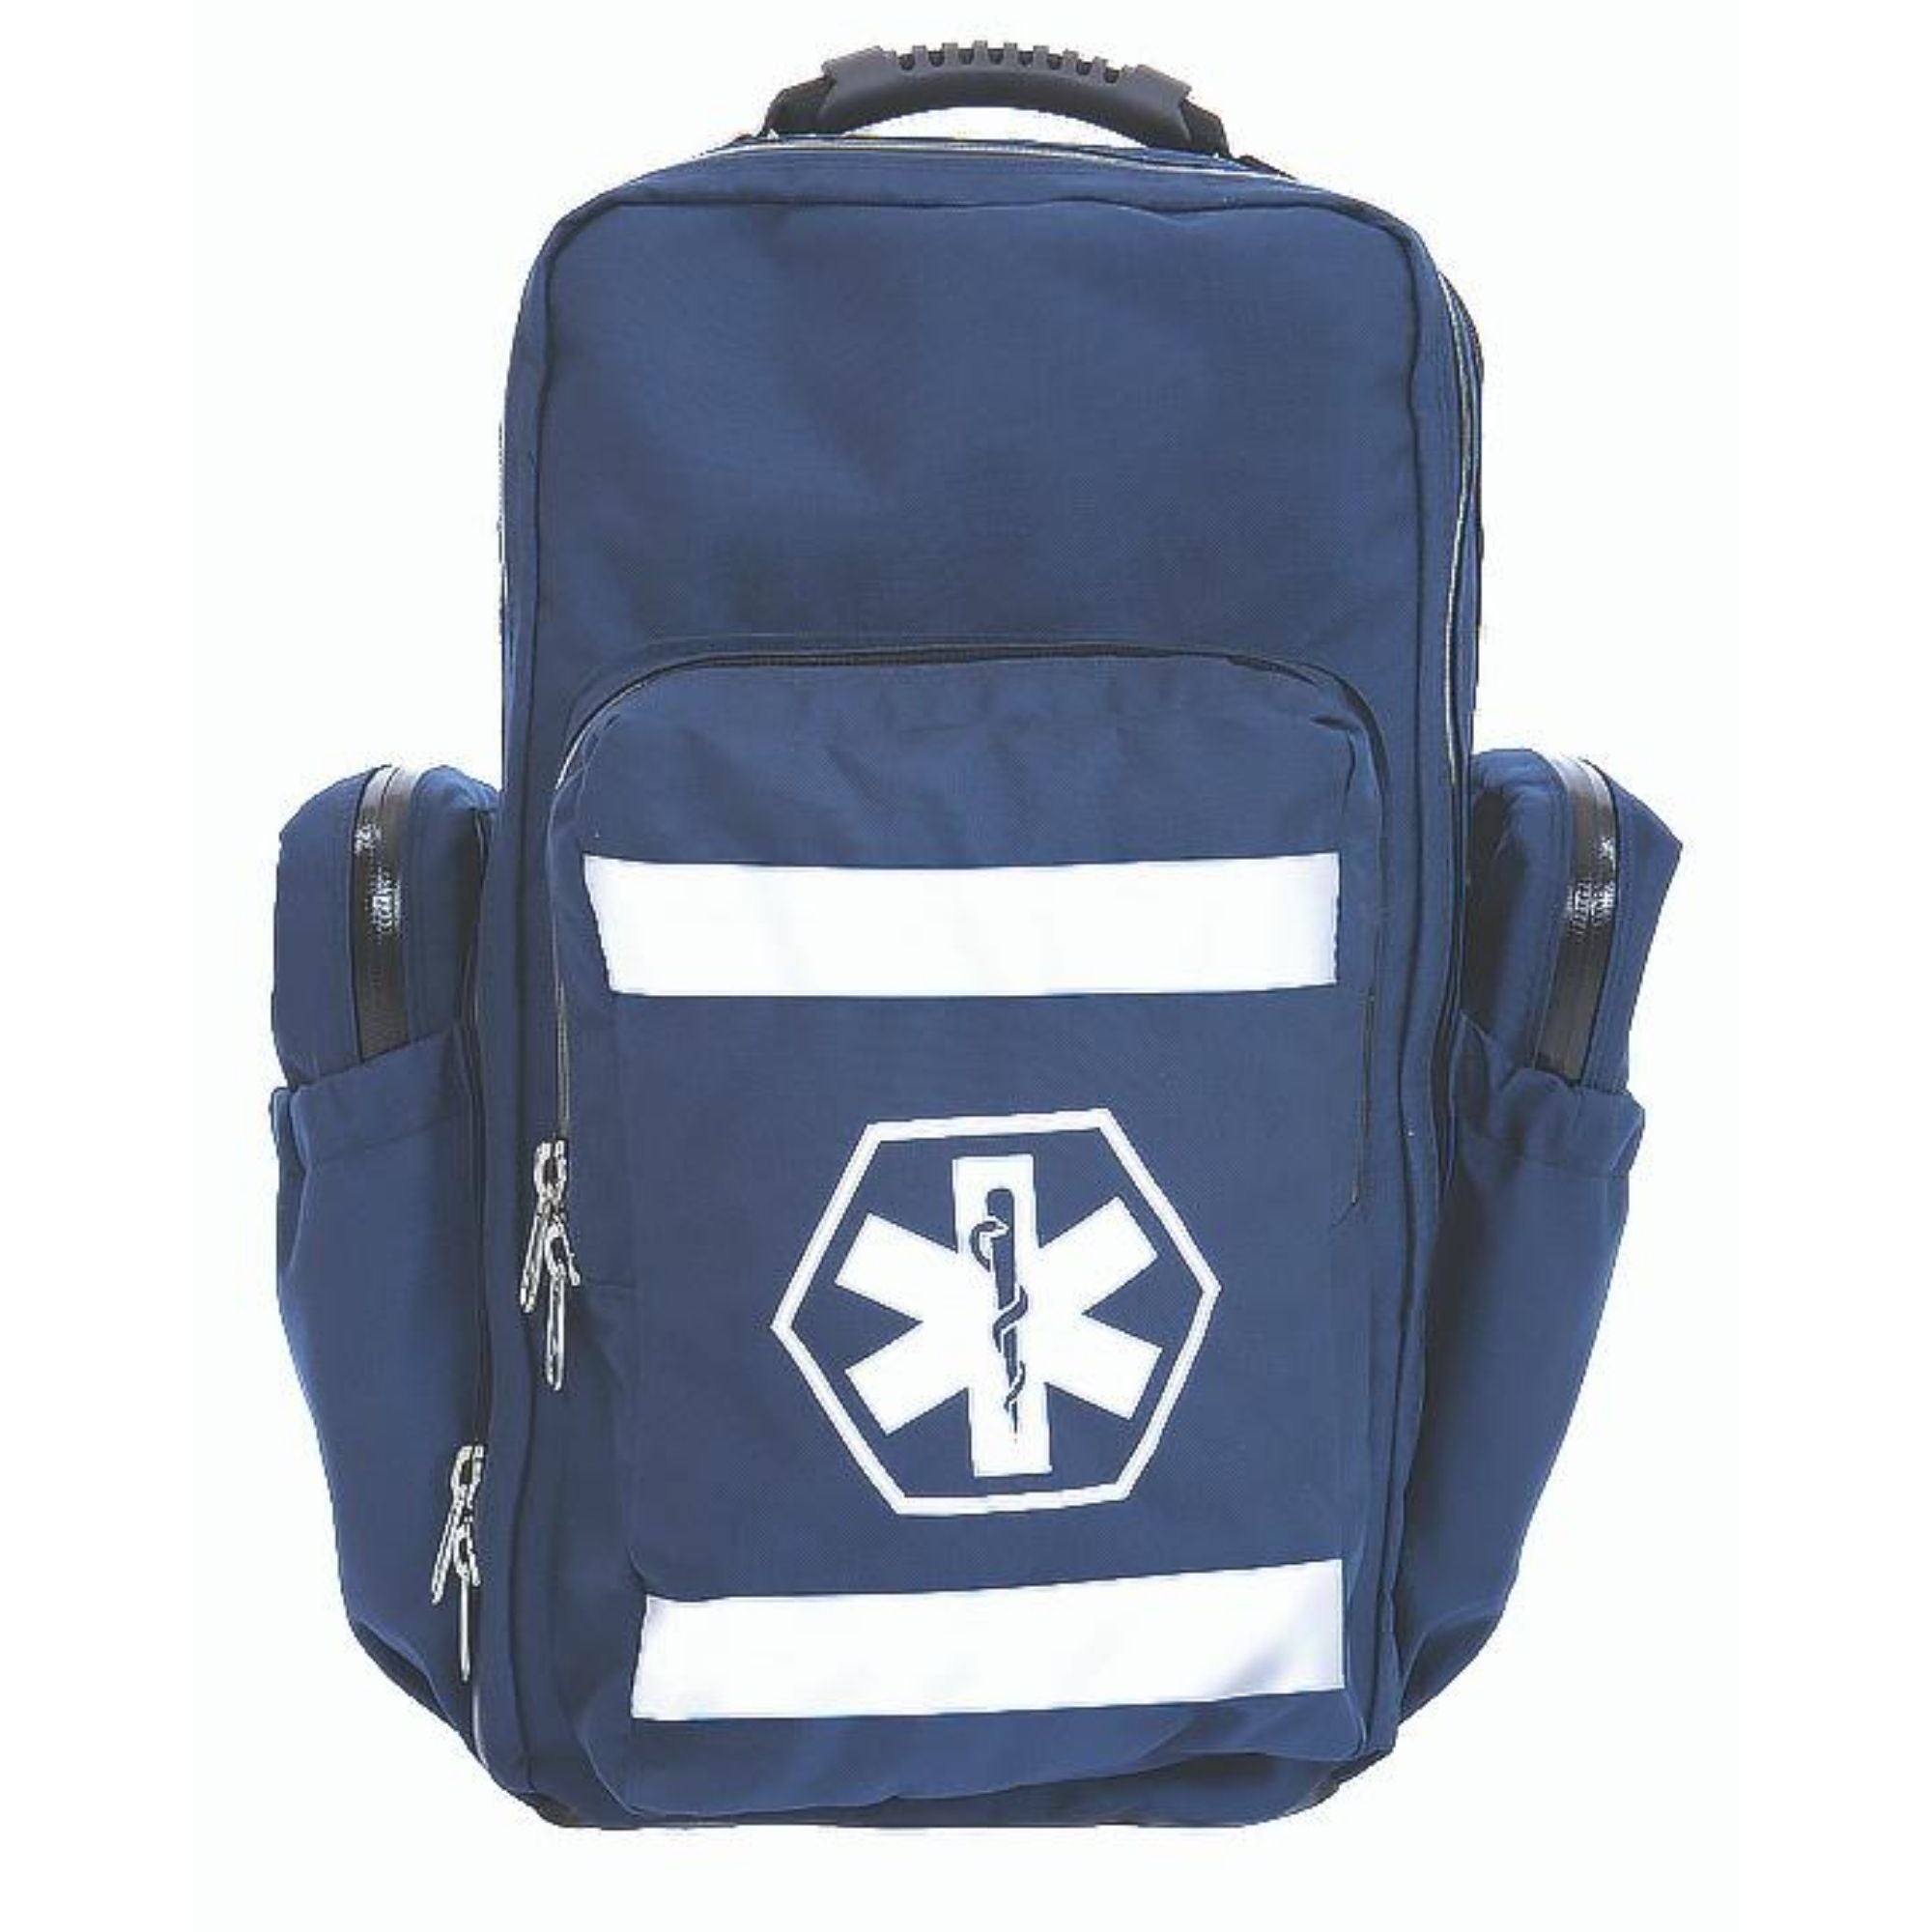 R&B Urban Rescue Backpack Search & Rescue Trauma Pack